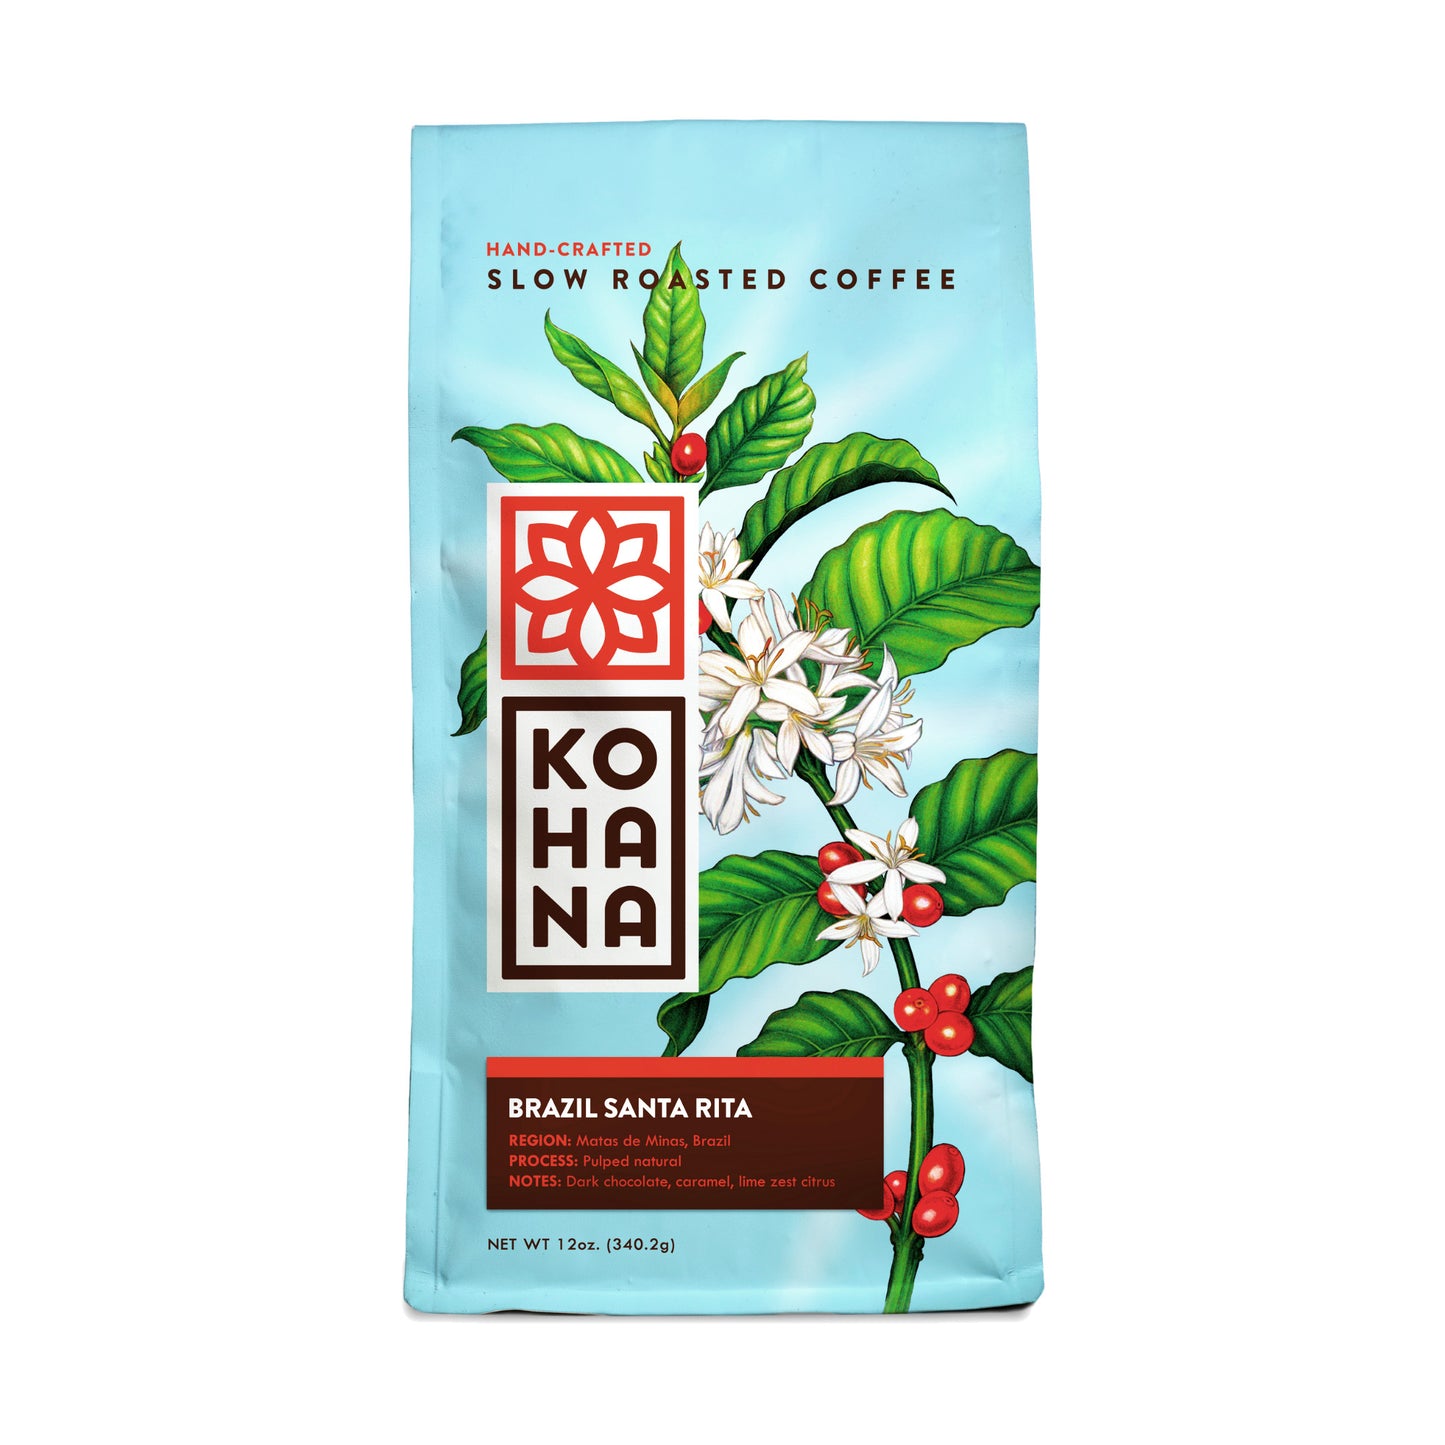 Brazil Santa Rita - Kohana Coffee